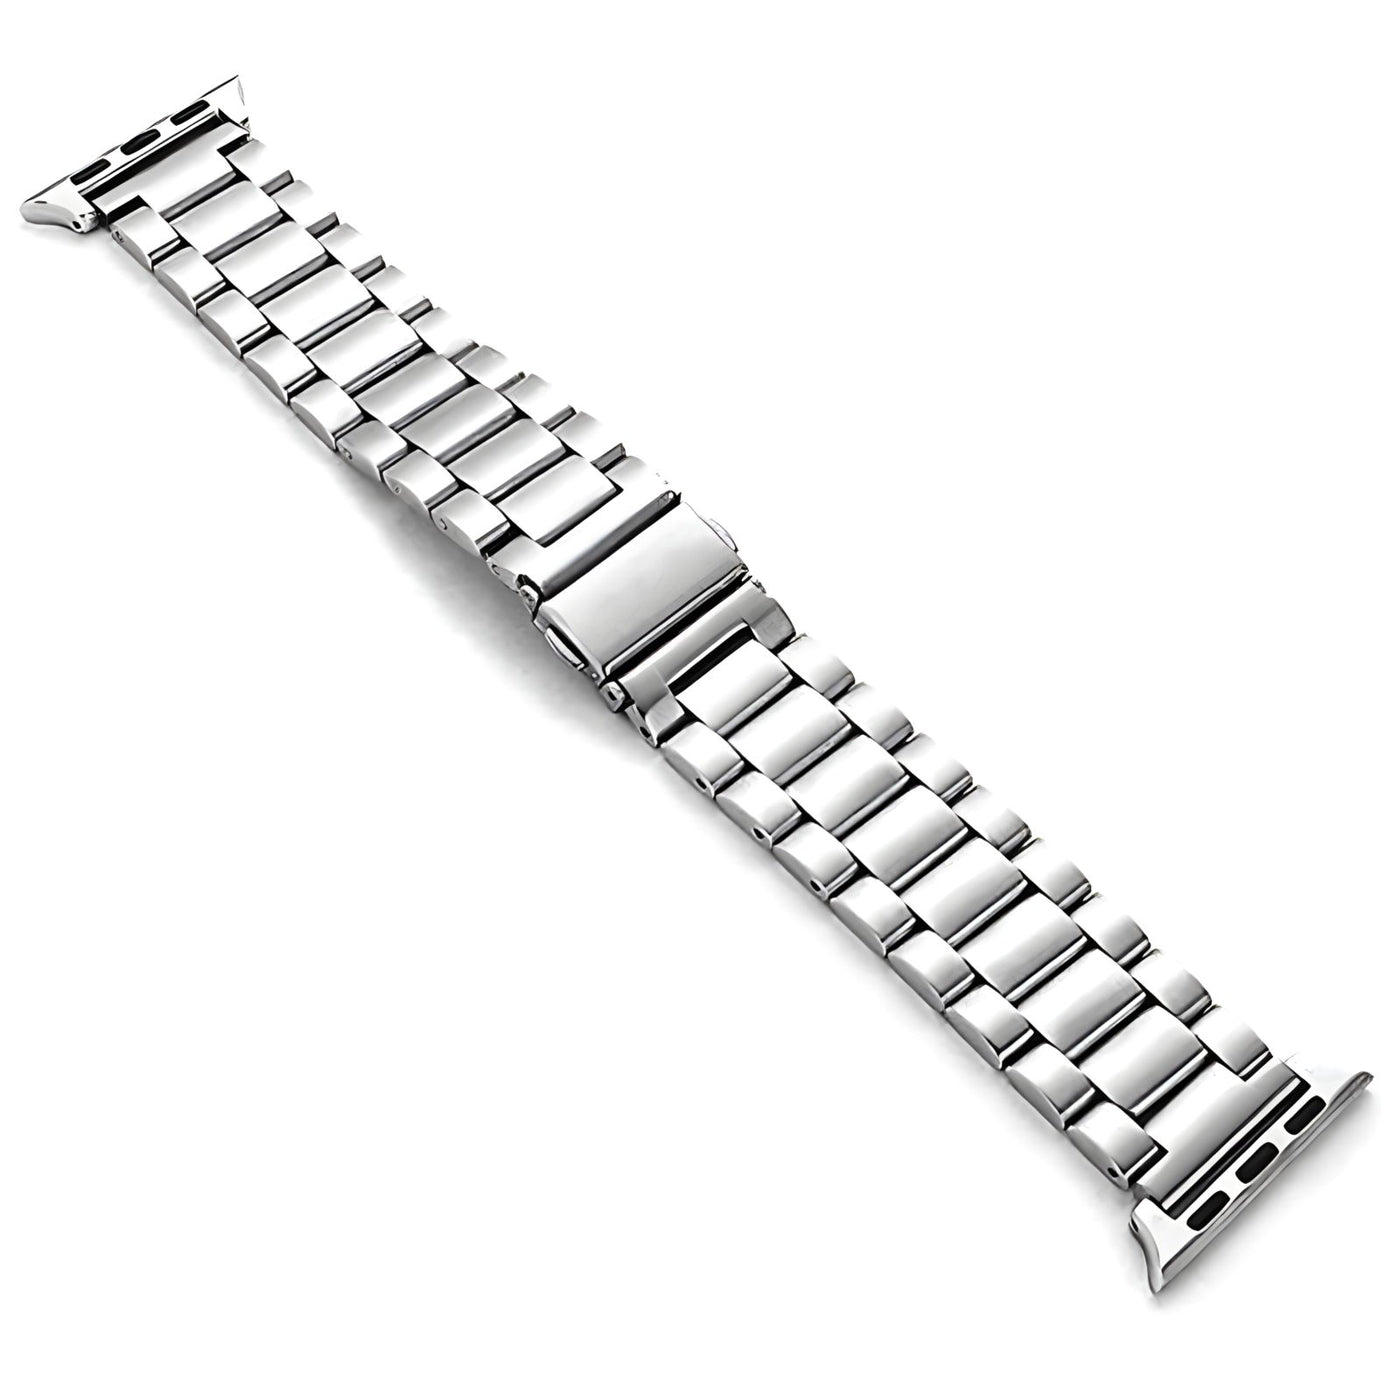 Bracelet Apple Watch silicone nautique – eWatch Straps